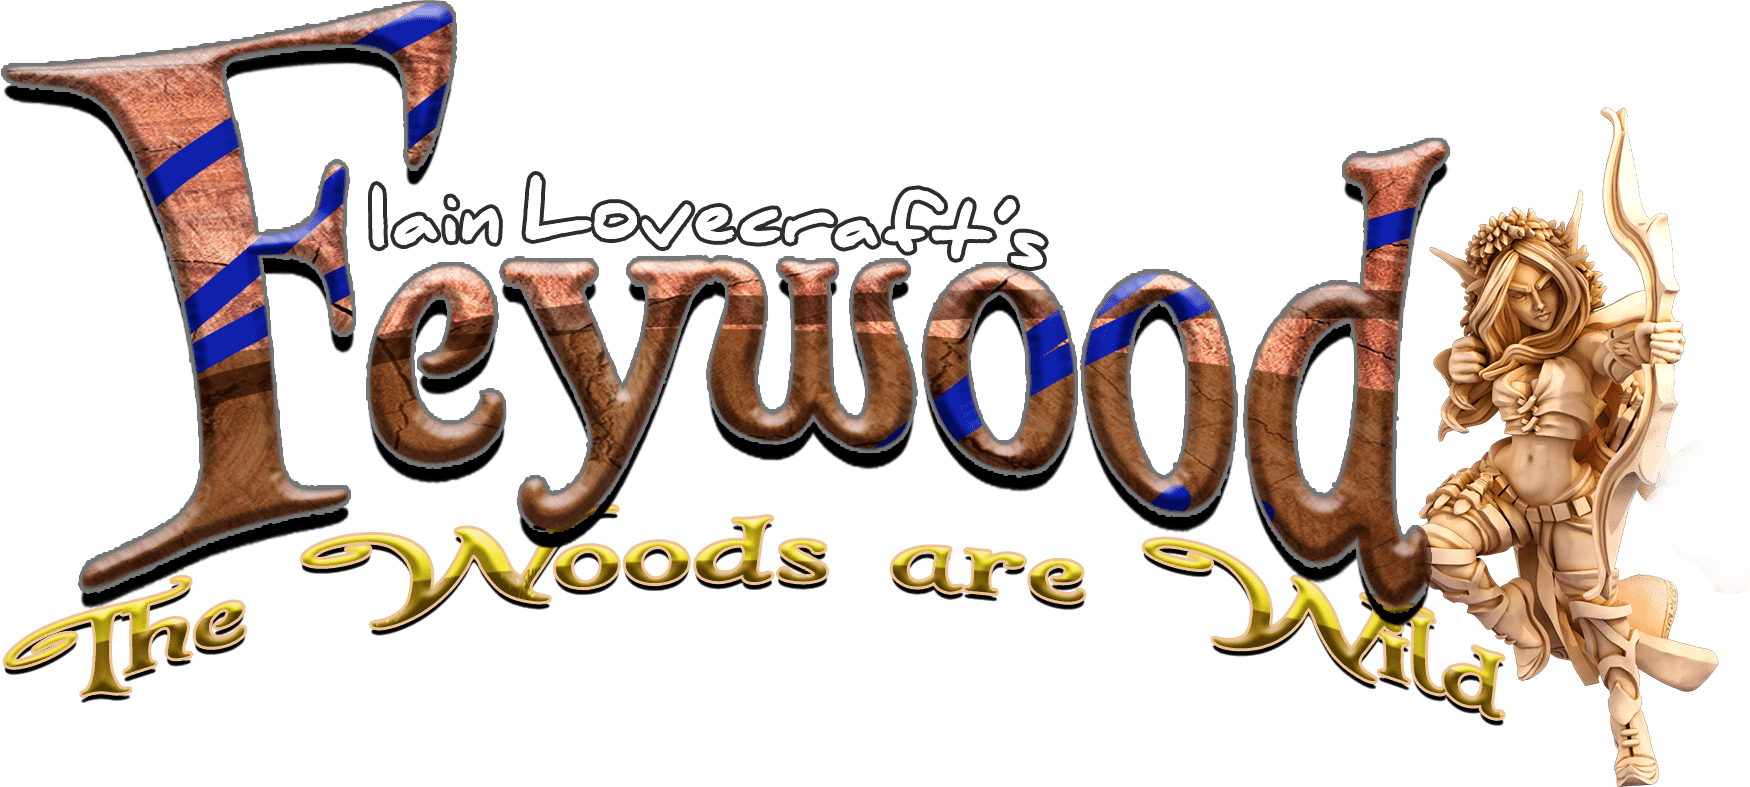 feywood-logo.png